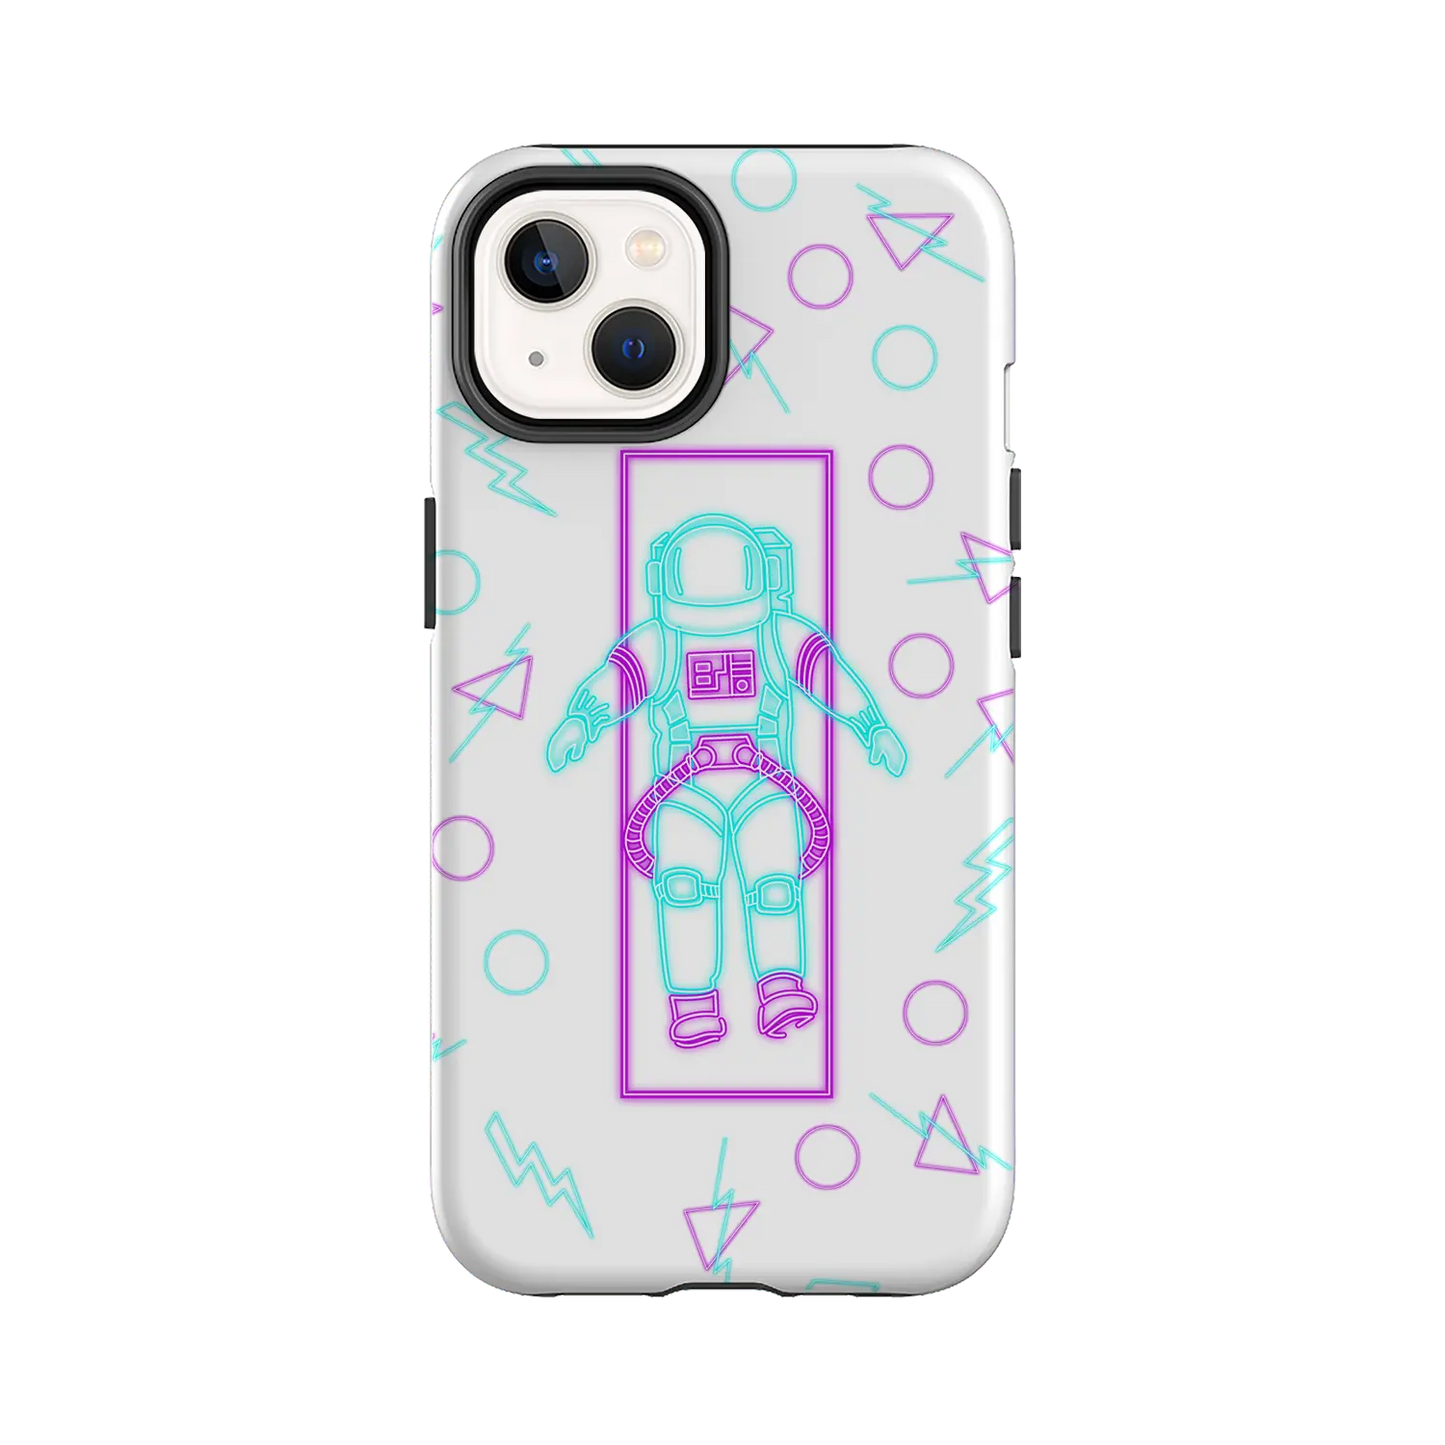 Neon Astro - Custom iPhone Case